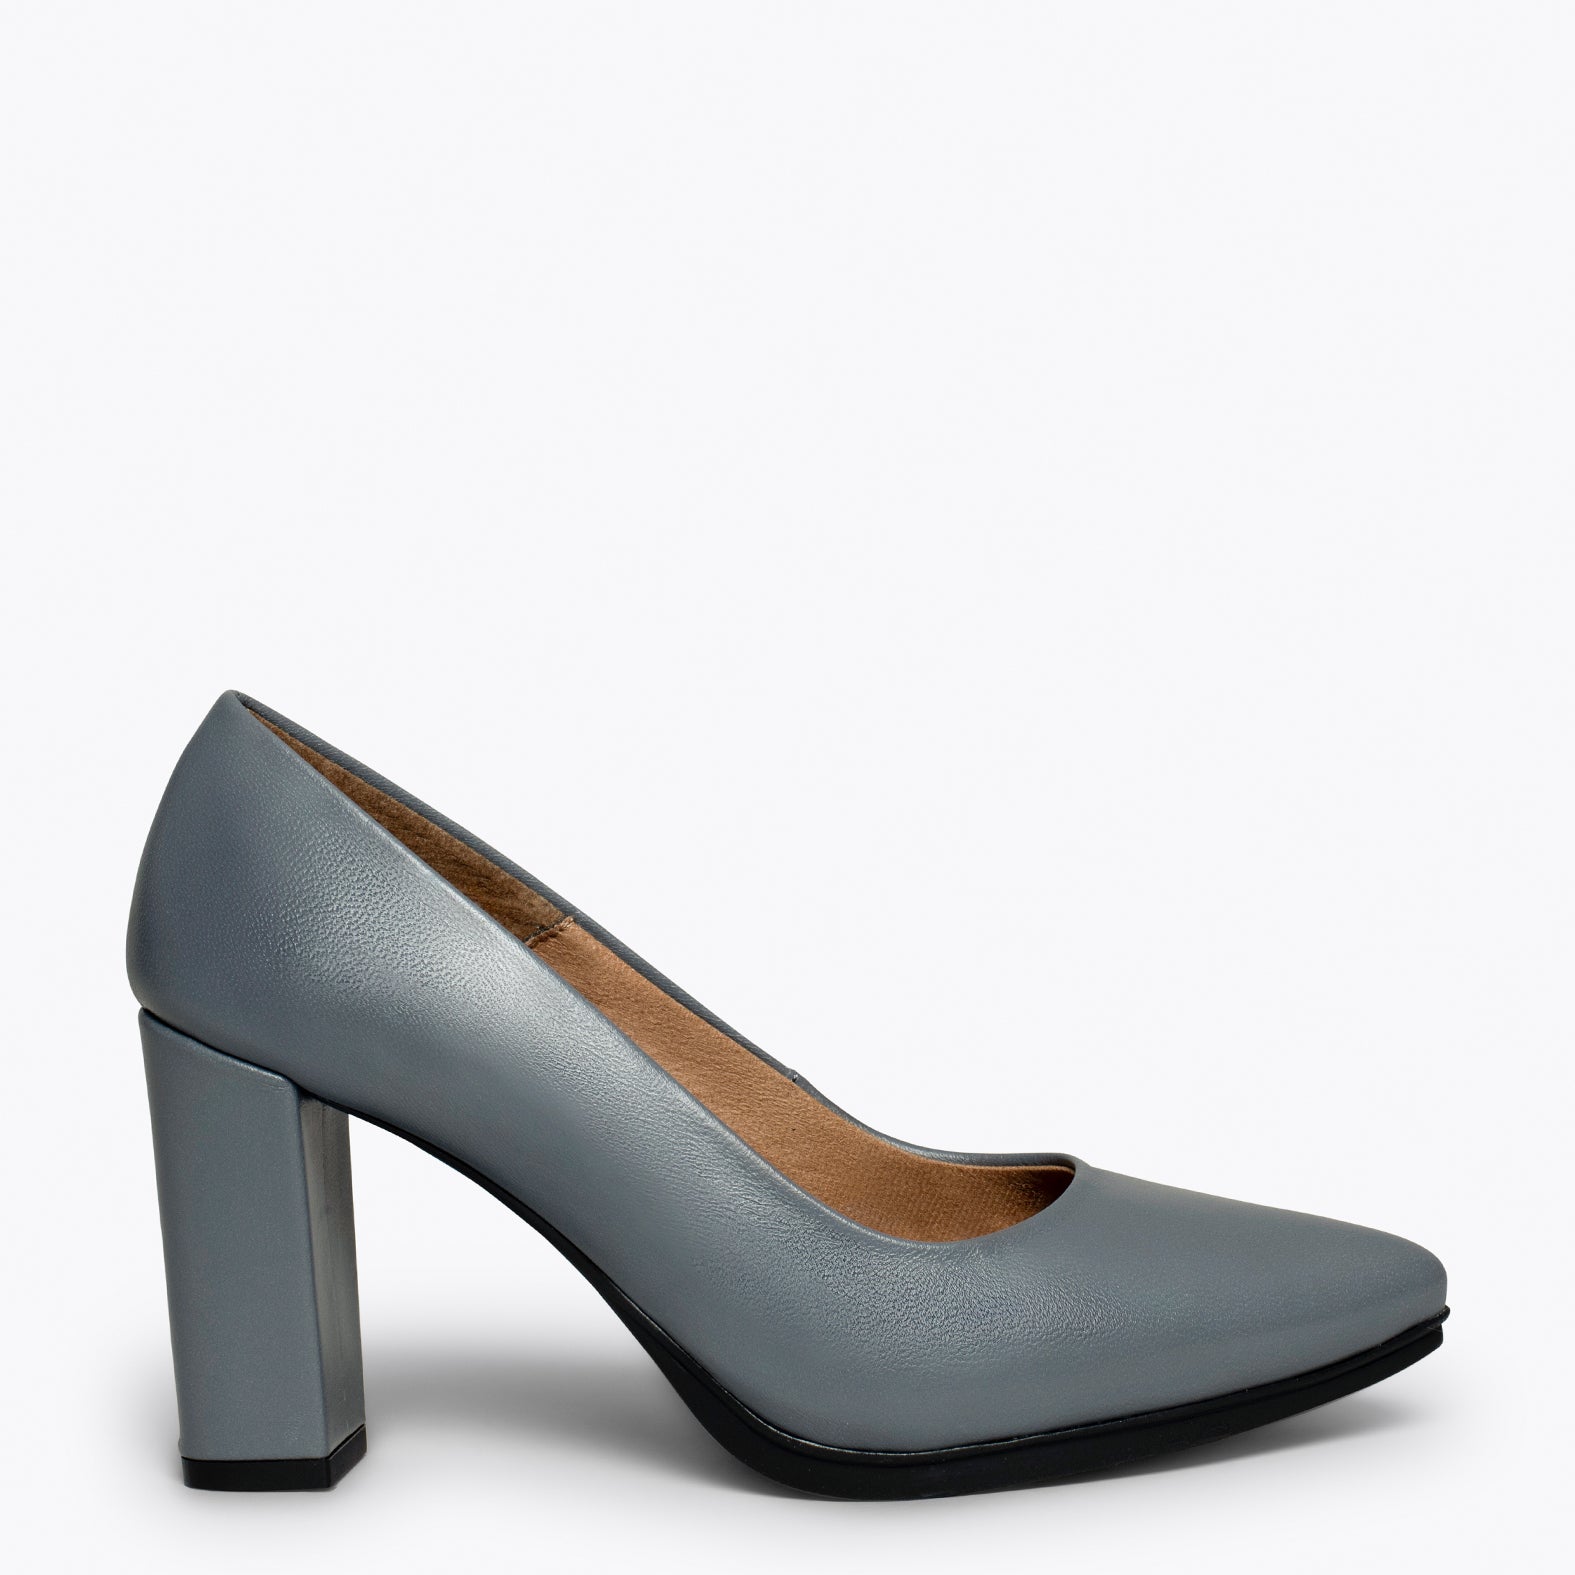 URBAN SALON – ASH BLUE nappa leather high heel